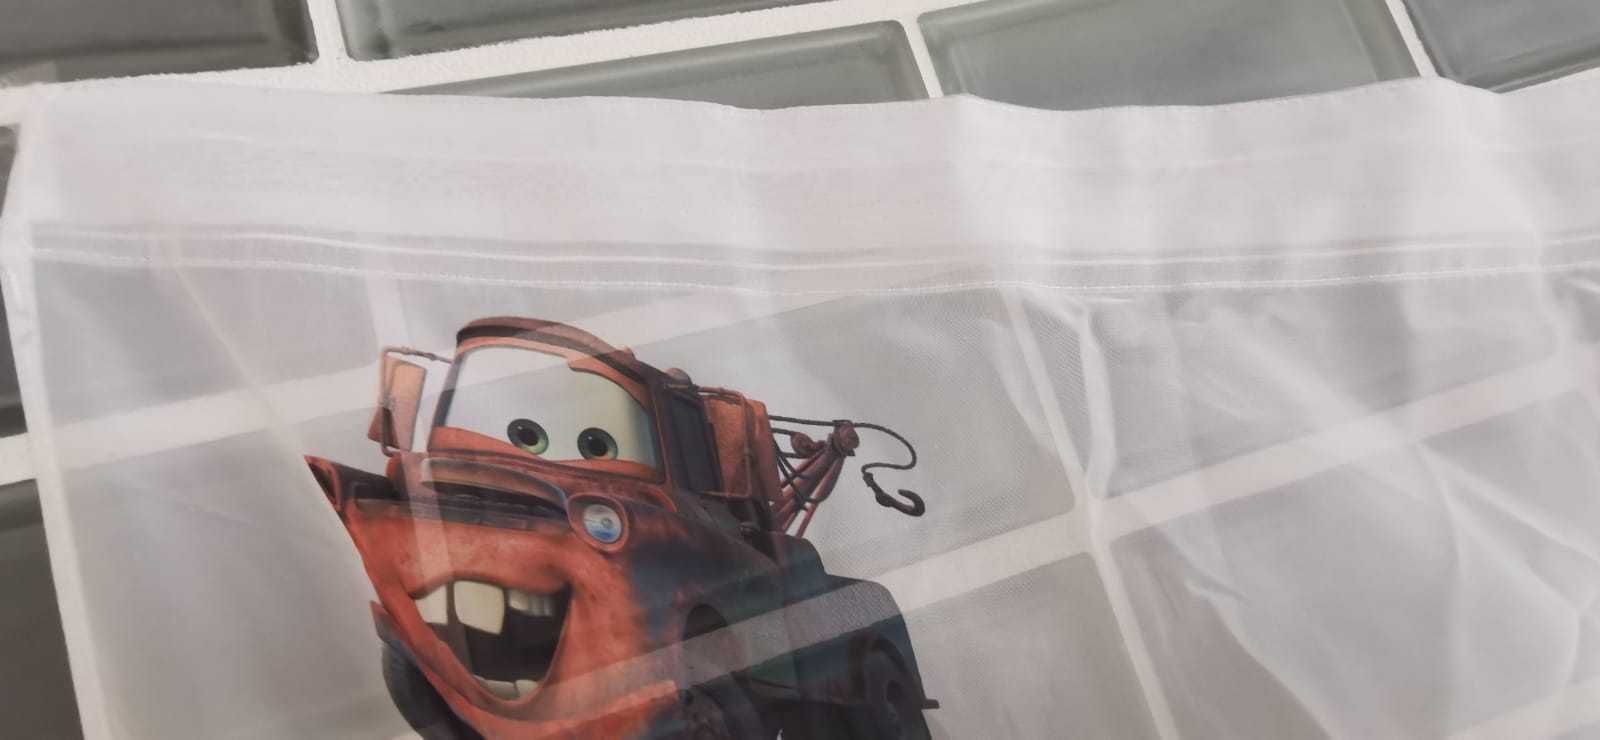 Firanki Disnay Pixar Auta (Cars) 2x 160cmx125cm